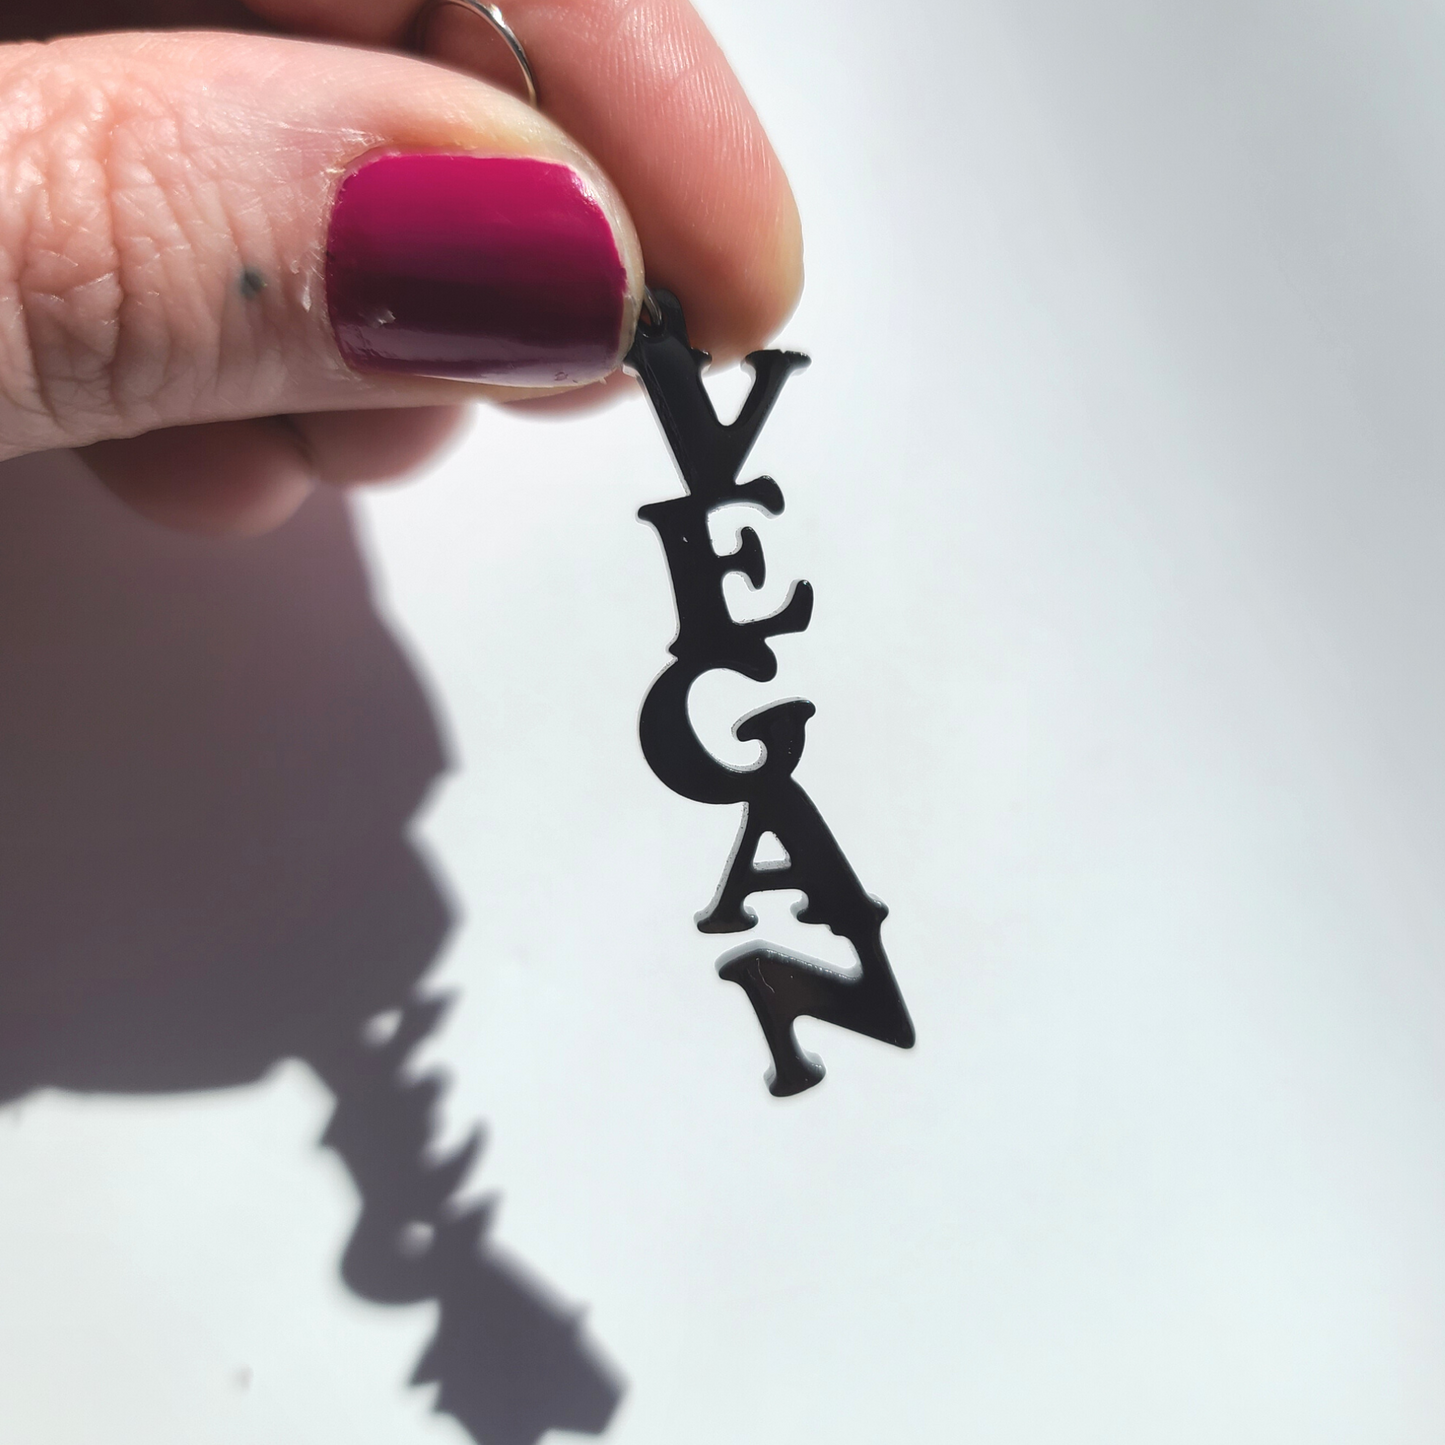 Vegan Text Black Acrylic - Earrings - Laser Cut